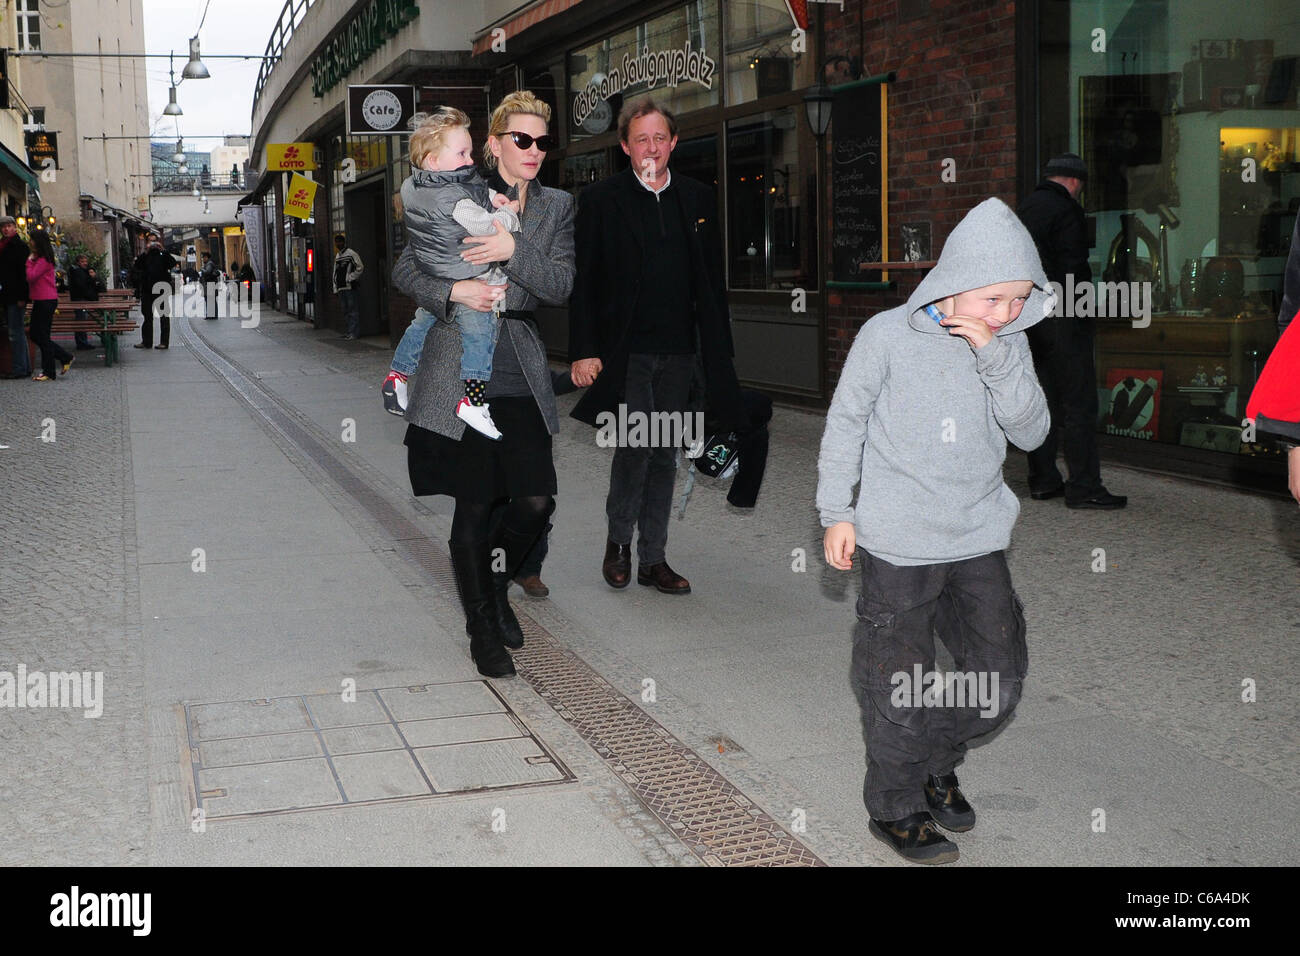 Cate Blanchett, mari, Andrew Upton et leurs enfants quitter 12 Apostel restaurant italien à Savignyplatz. Berlin, Allemagne - Banque D'Images